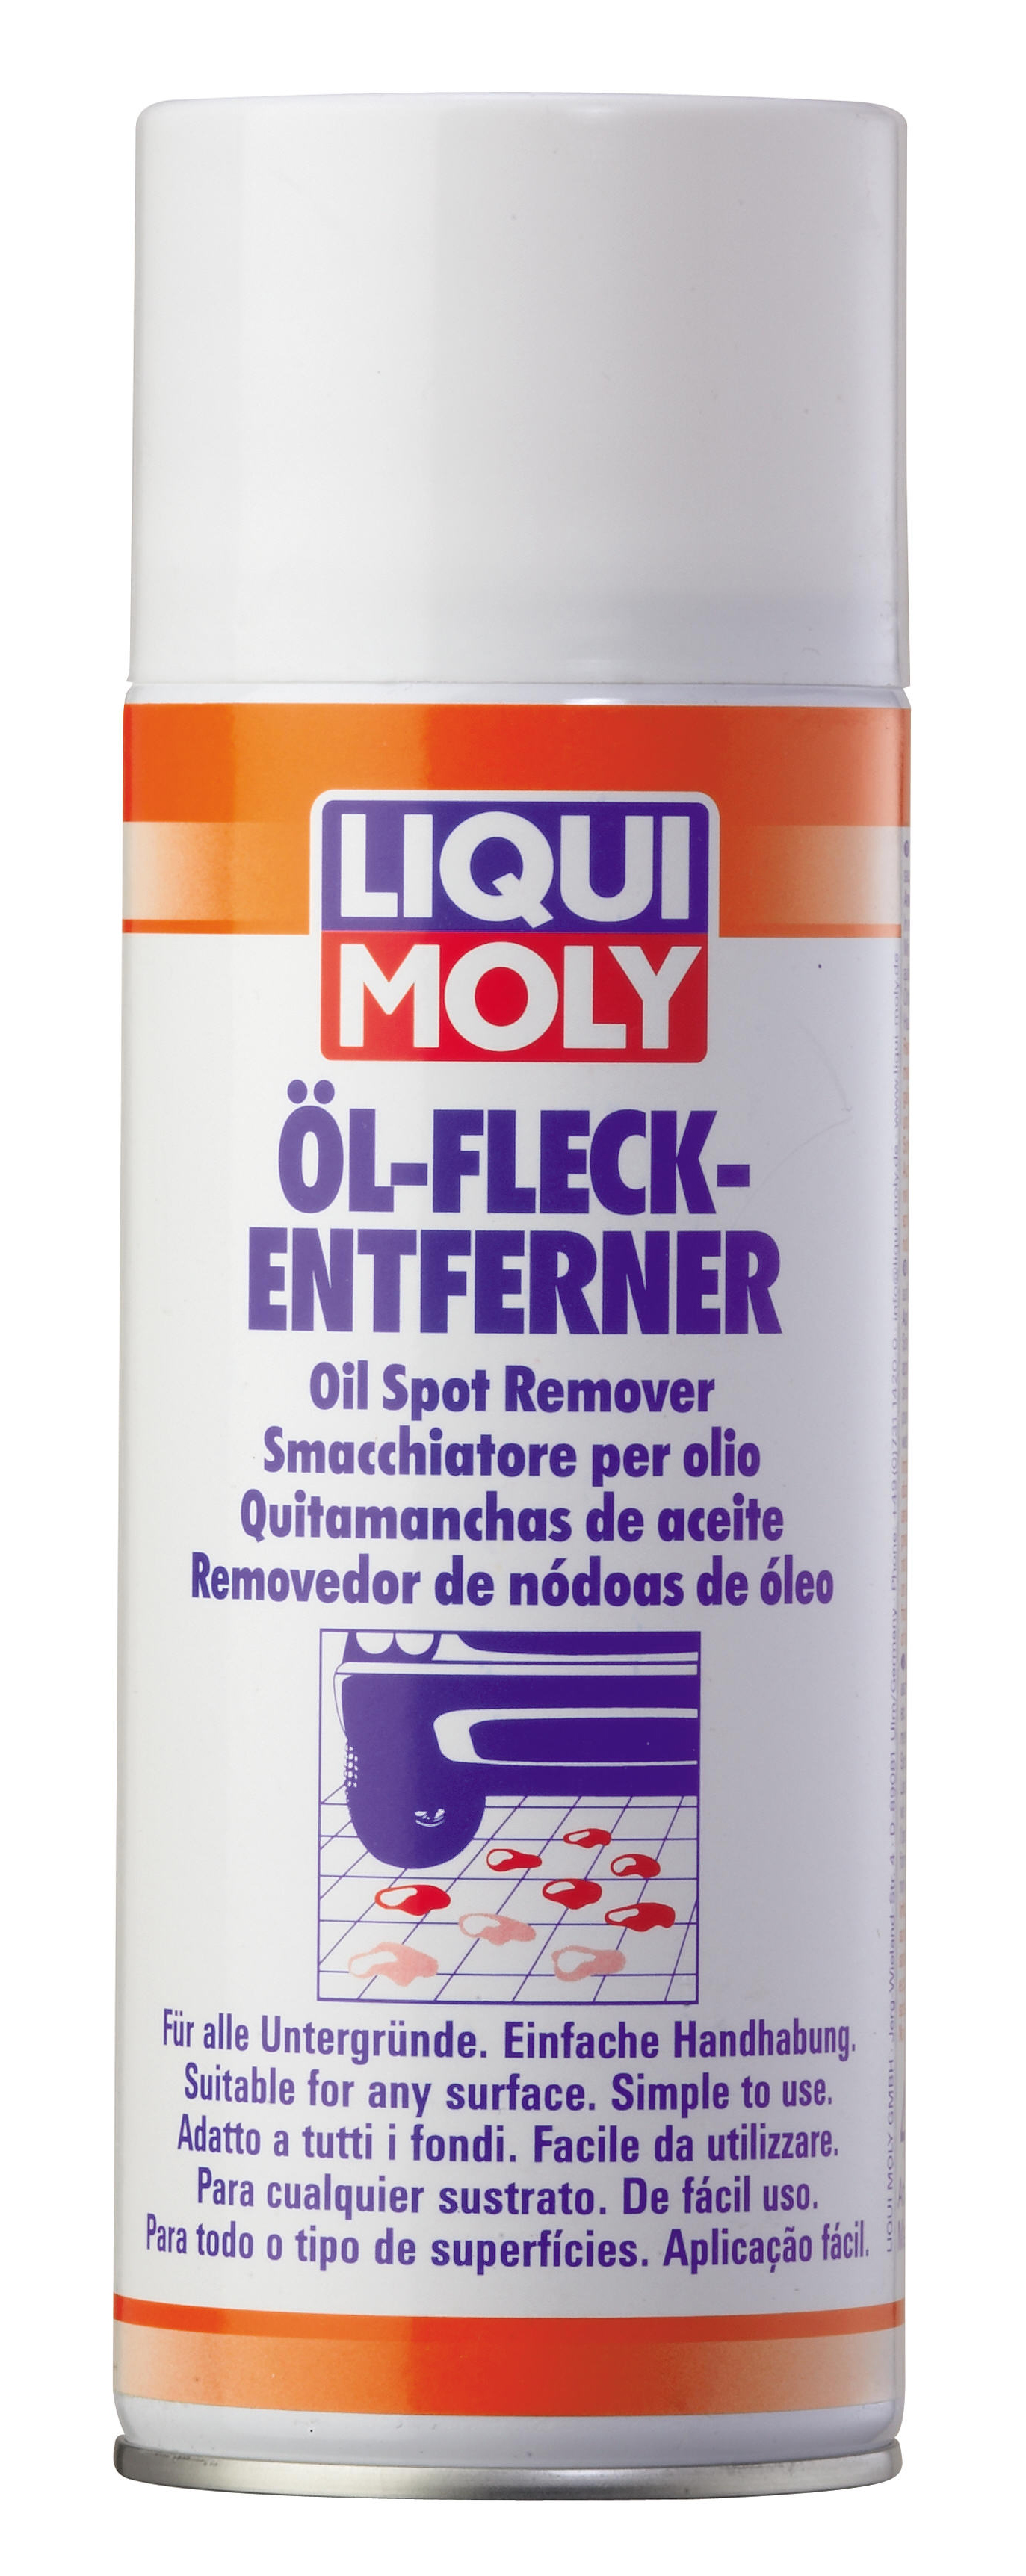 LIQUI MOLY ÖL-FLECK.-ENTFERNER 400ML